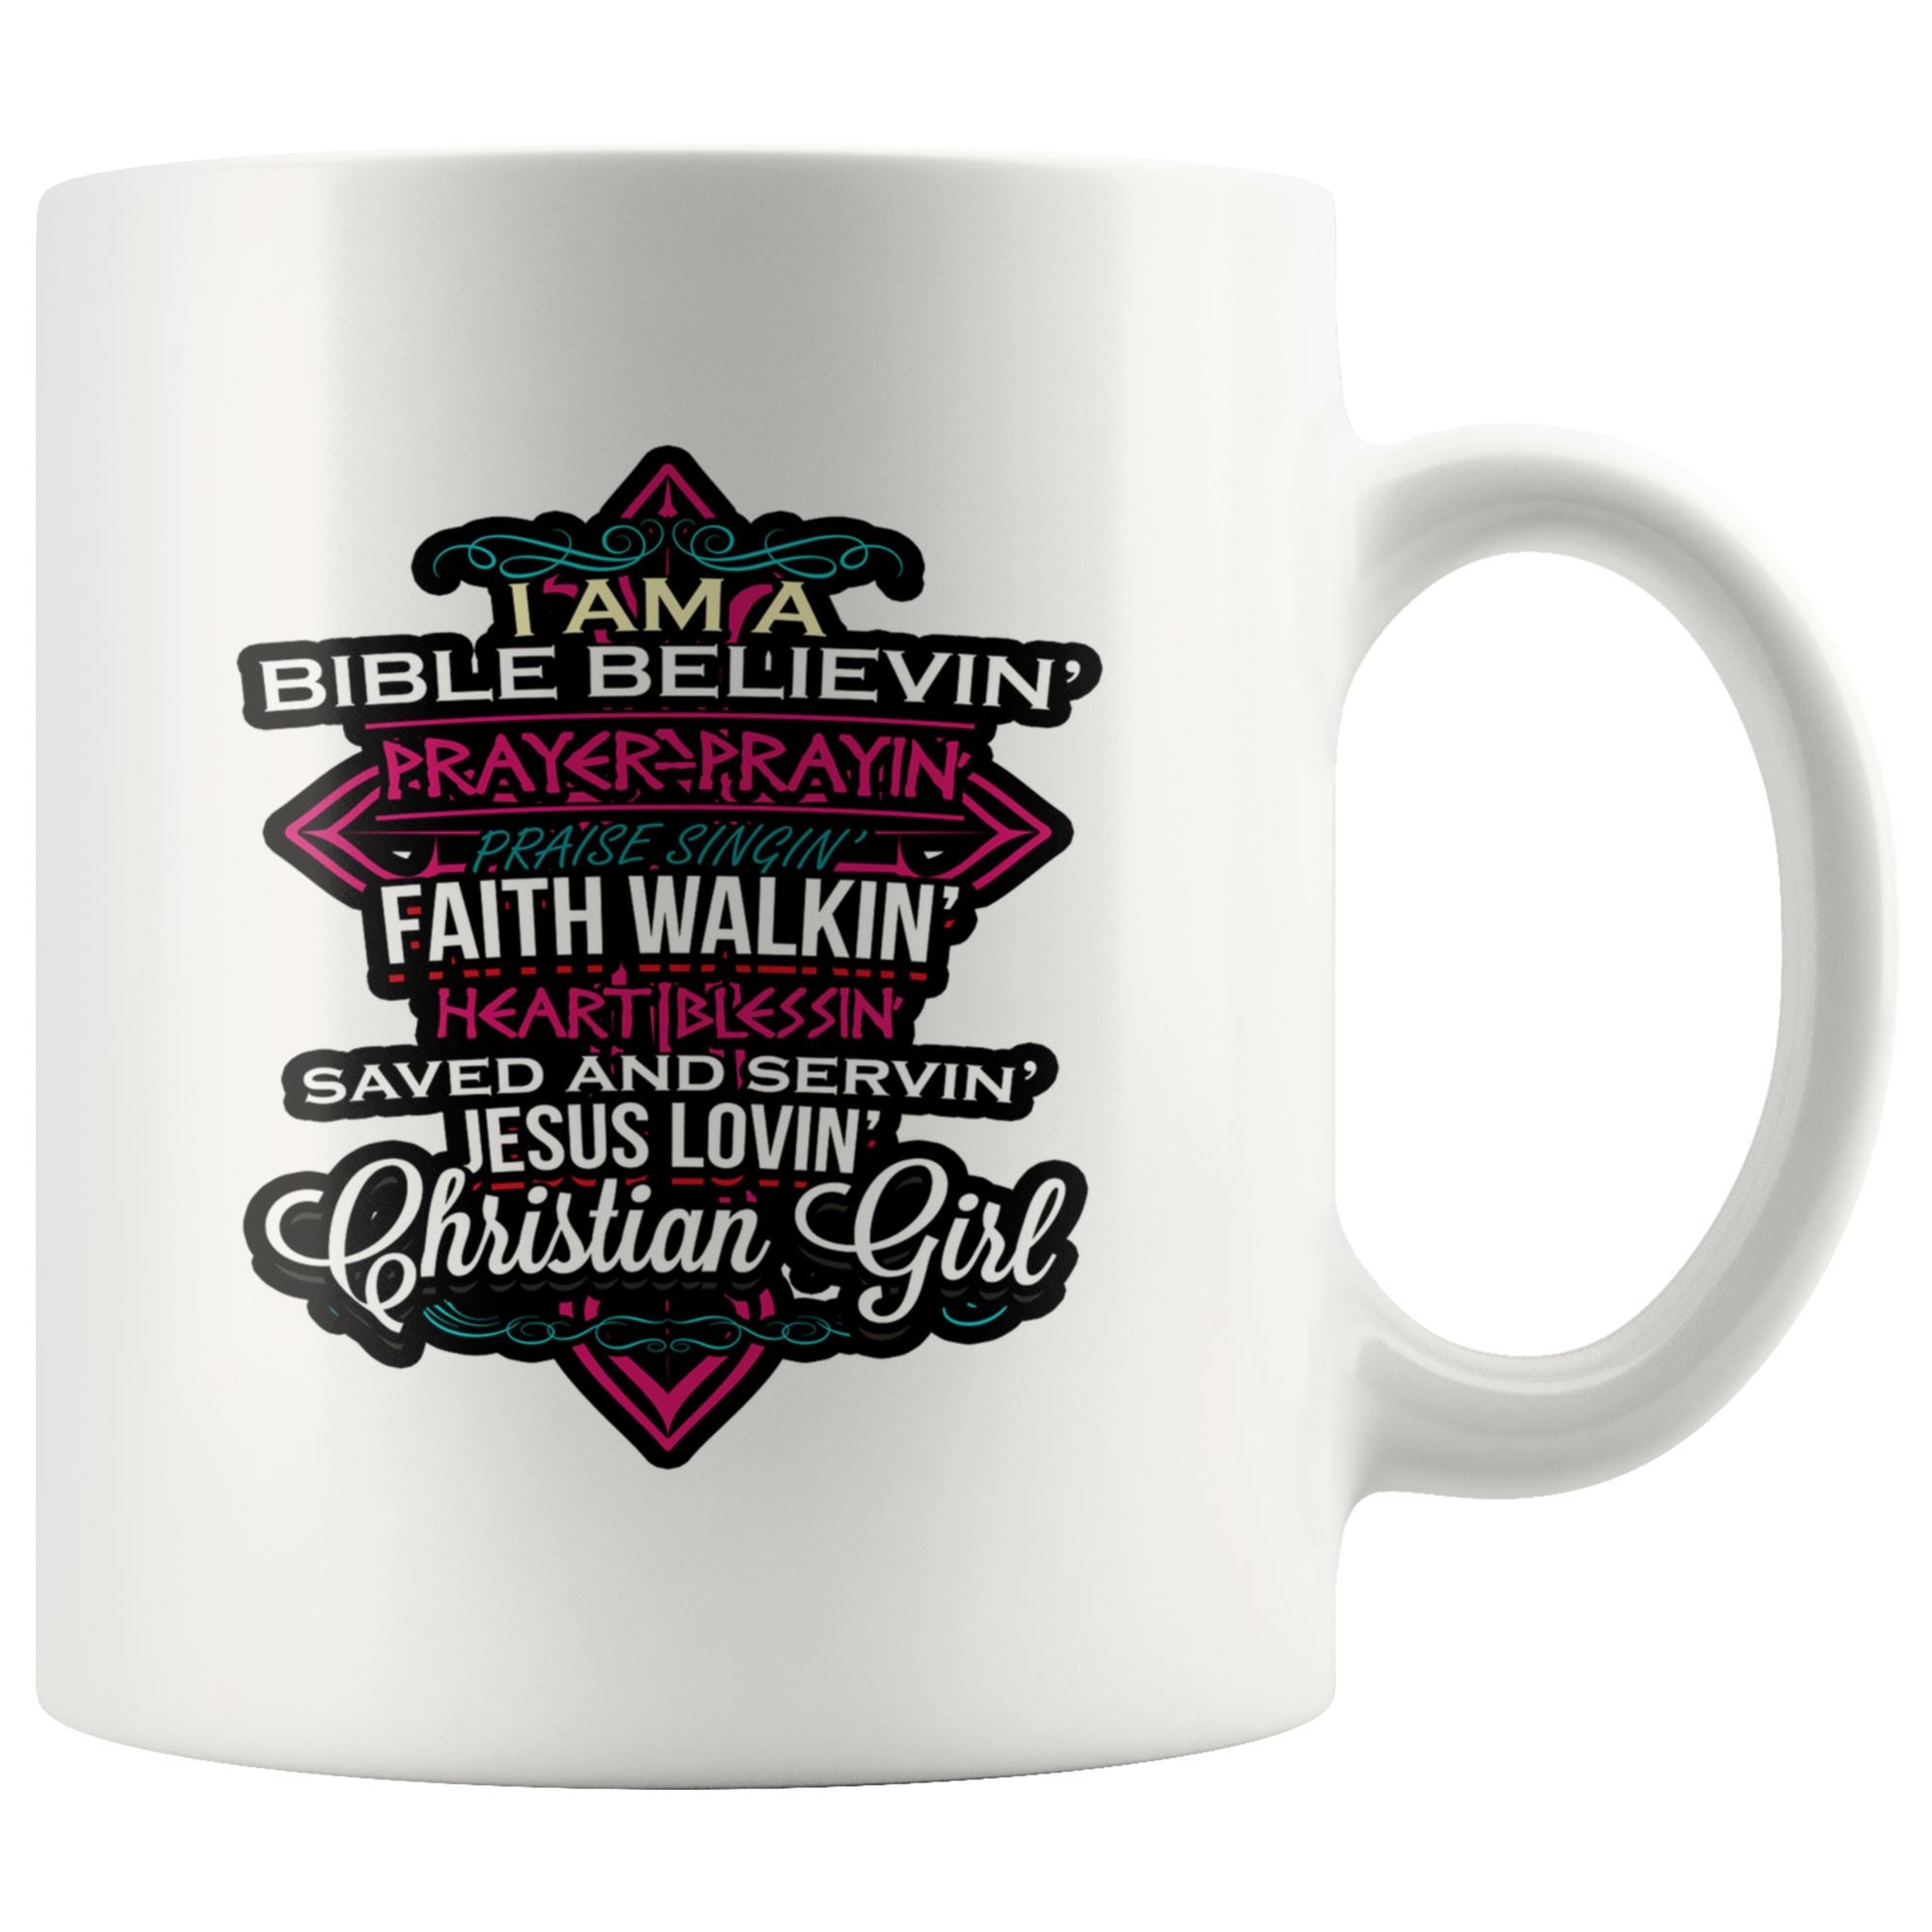 Christian Girl Drinkware teelaunch 11oz Mug 